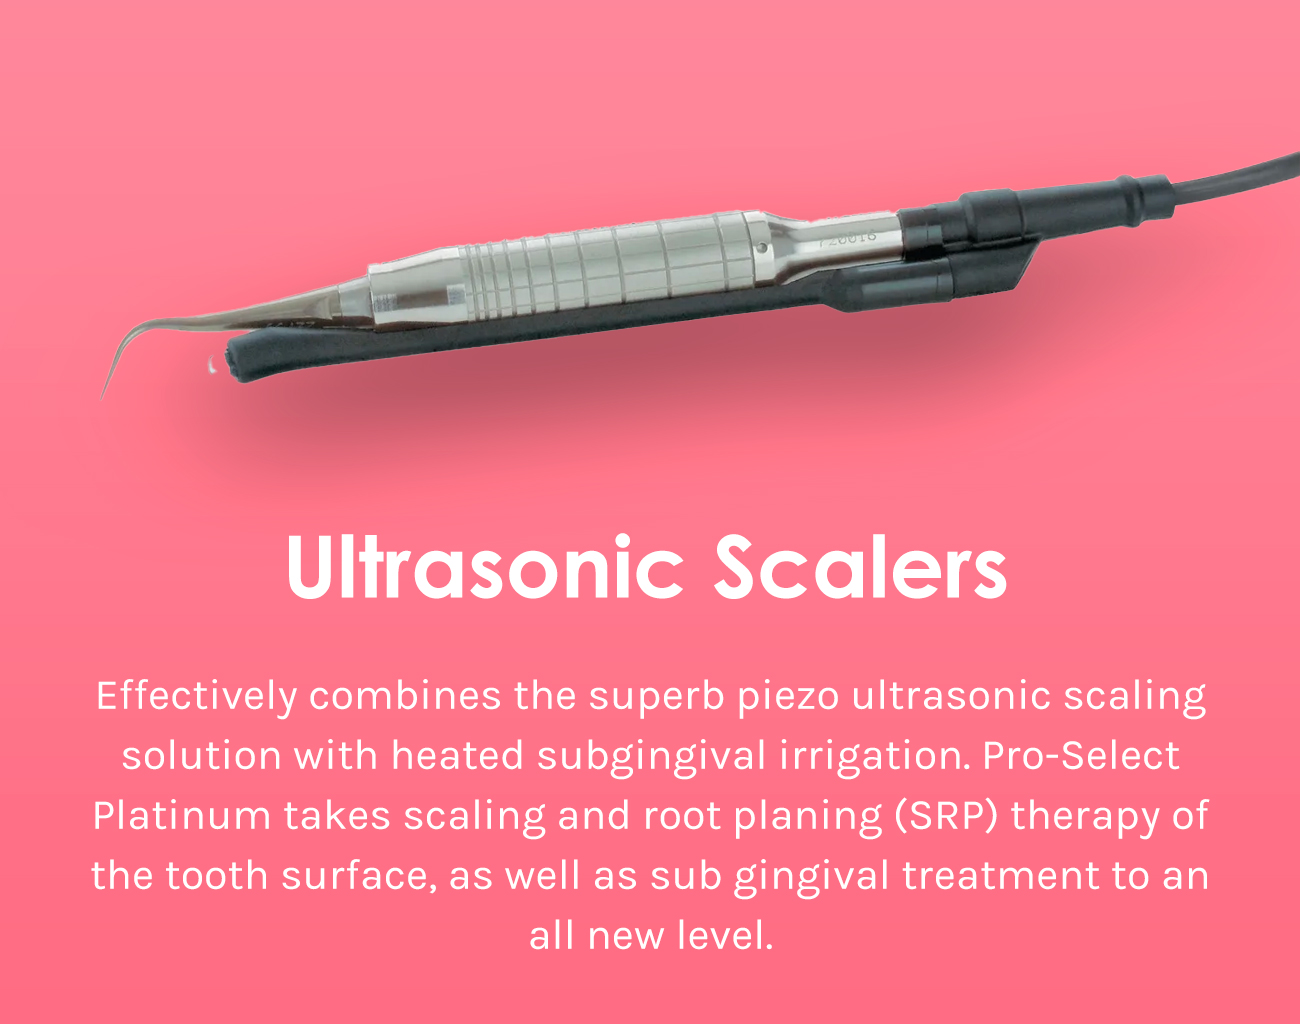 Ultrasonic Scalers